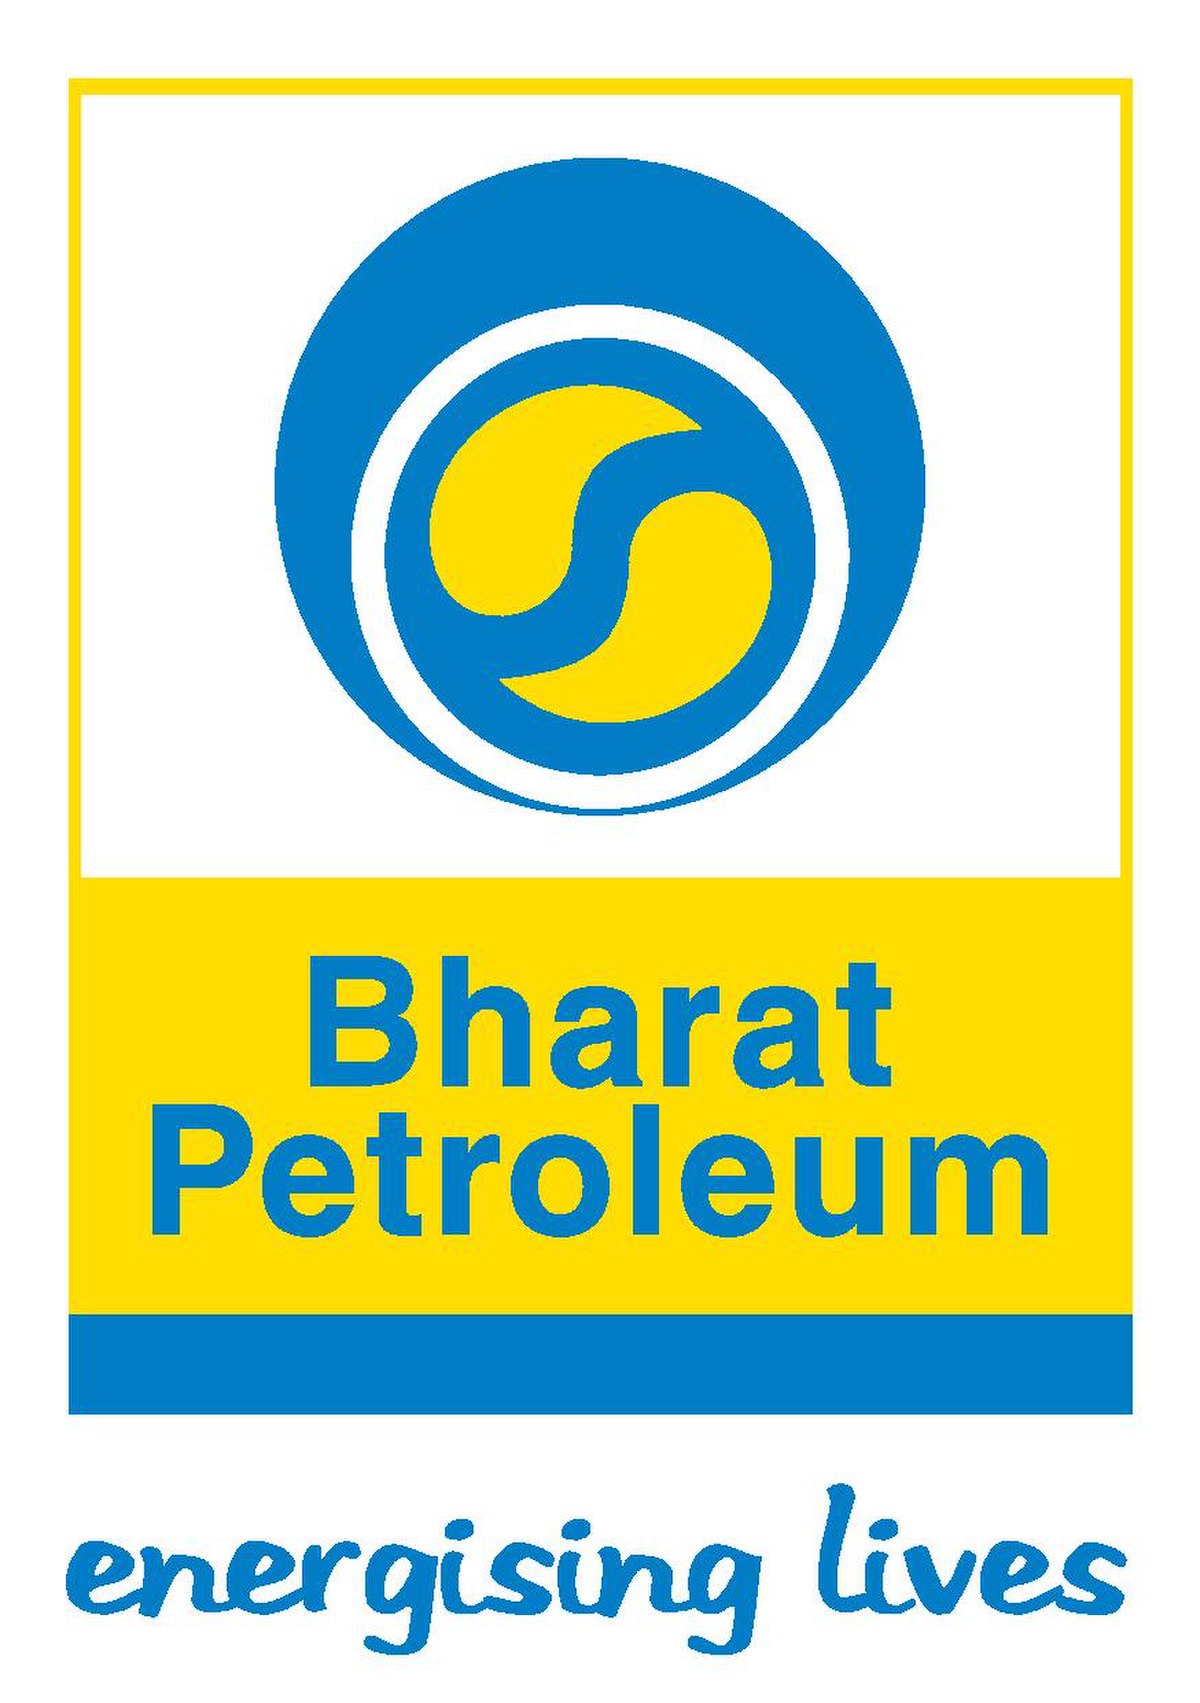 Bharat Petroleum - Wikipedia